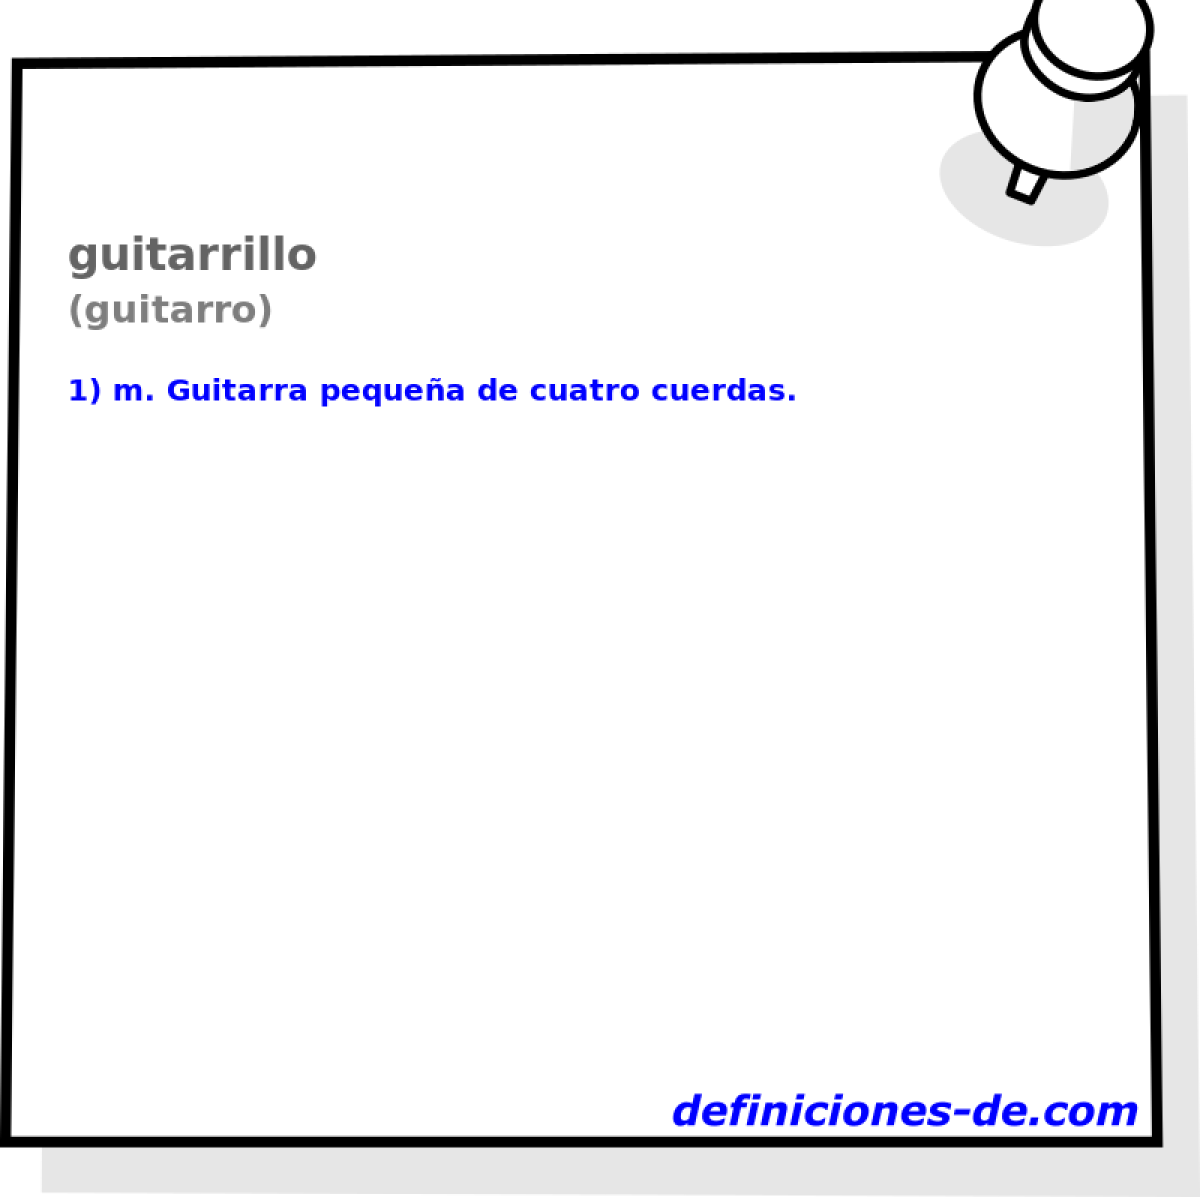 guitarrillo (guitarro)